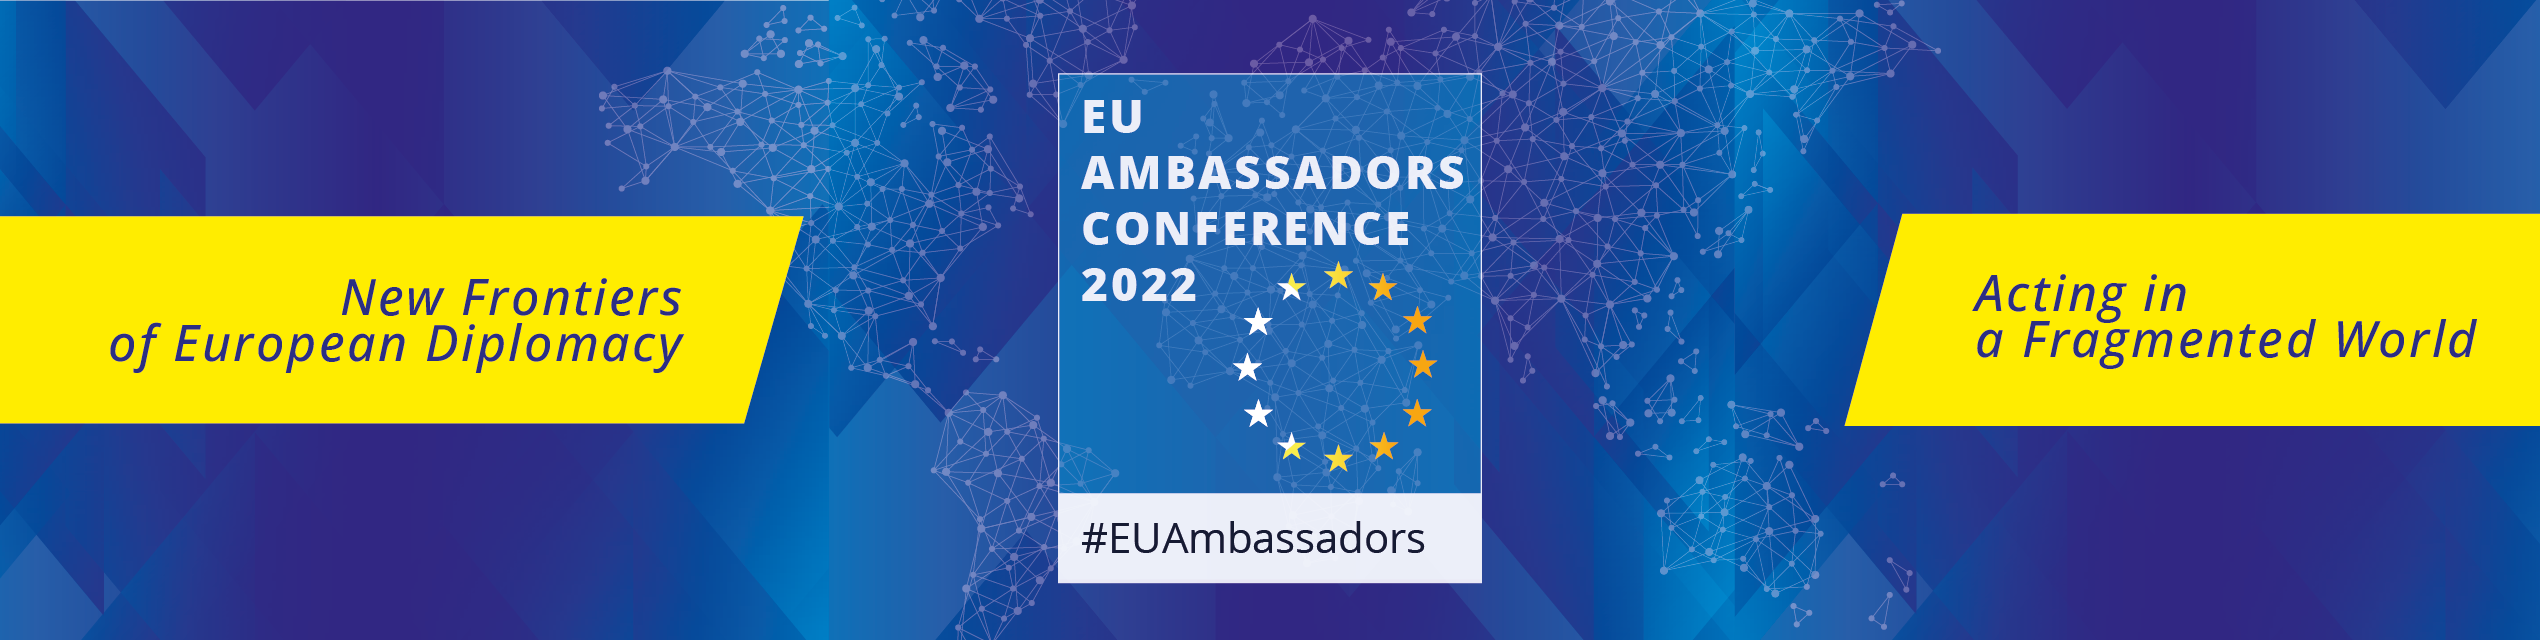 EU Ambassadors' Conference 2022 banner